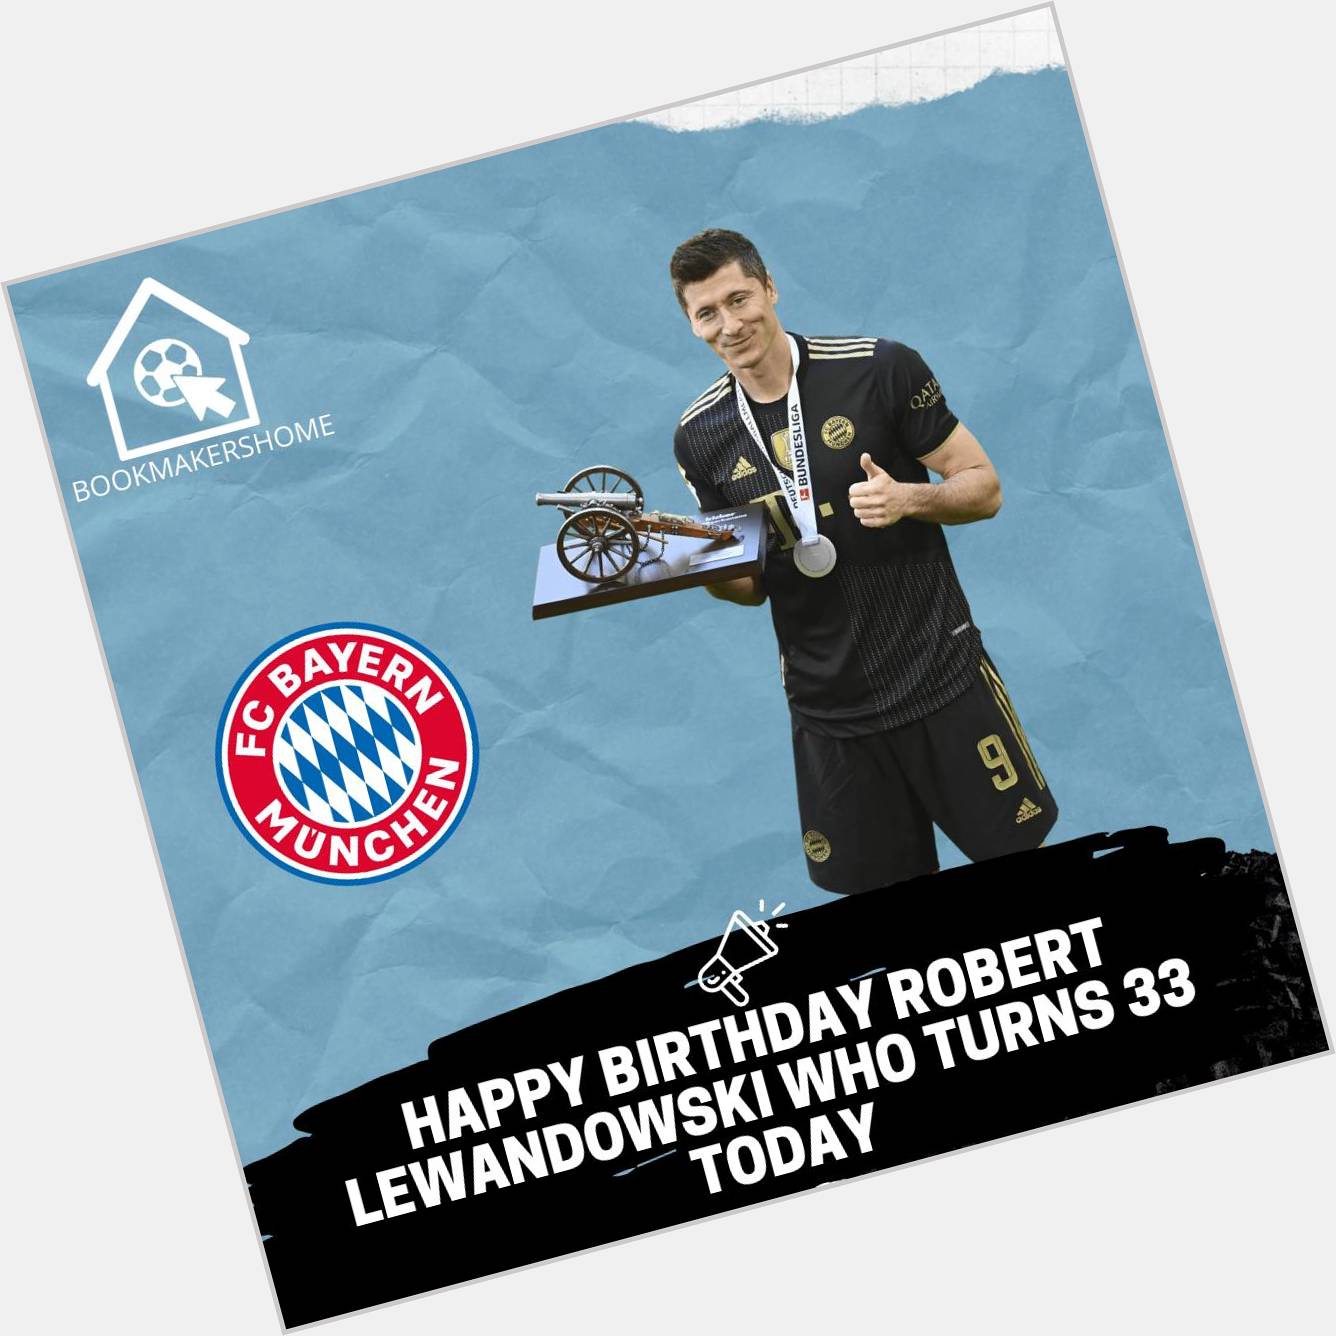 Happy birthday Robert Lewandowski who turns 33 today!  